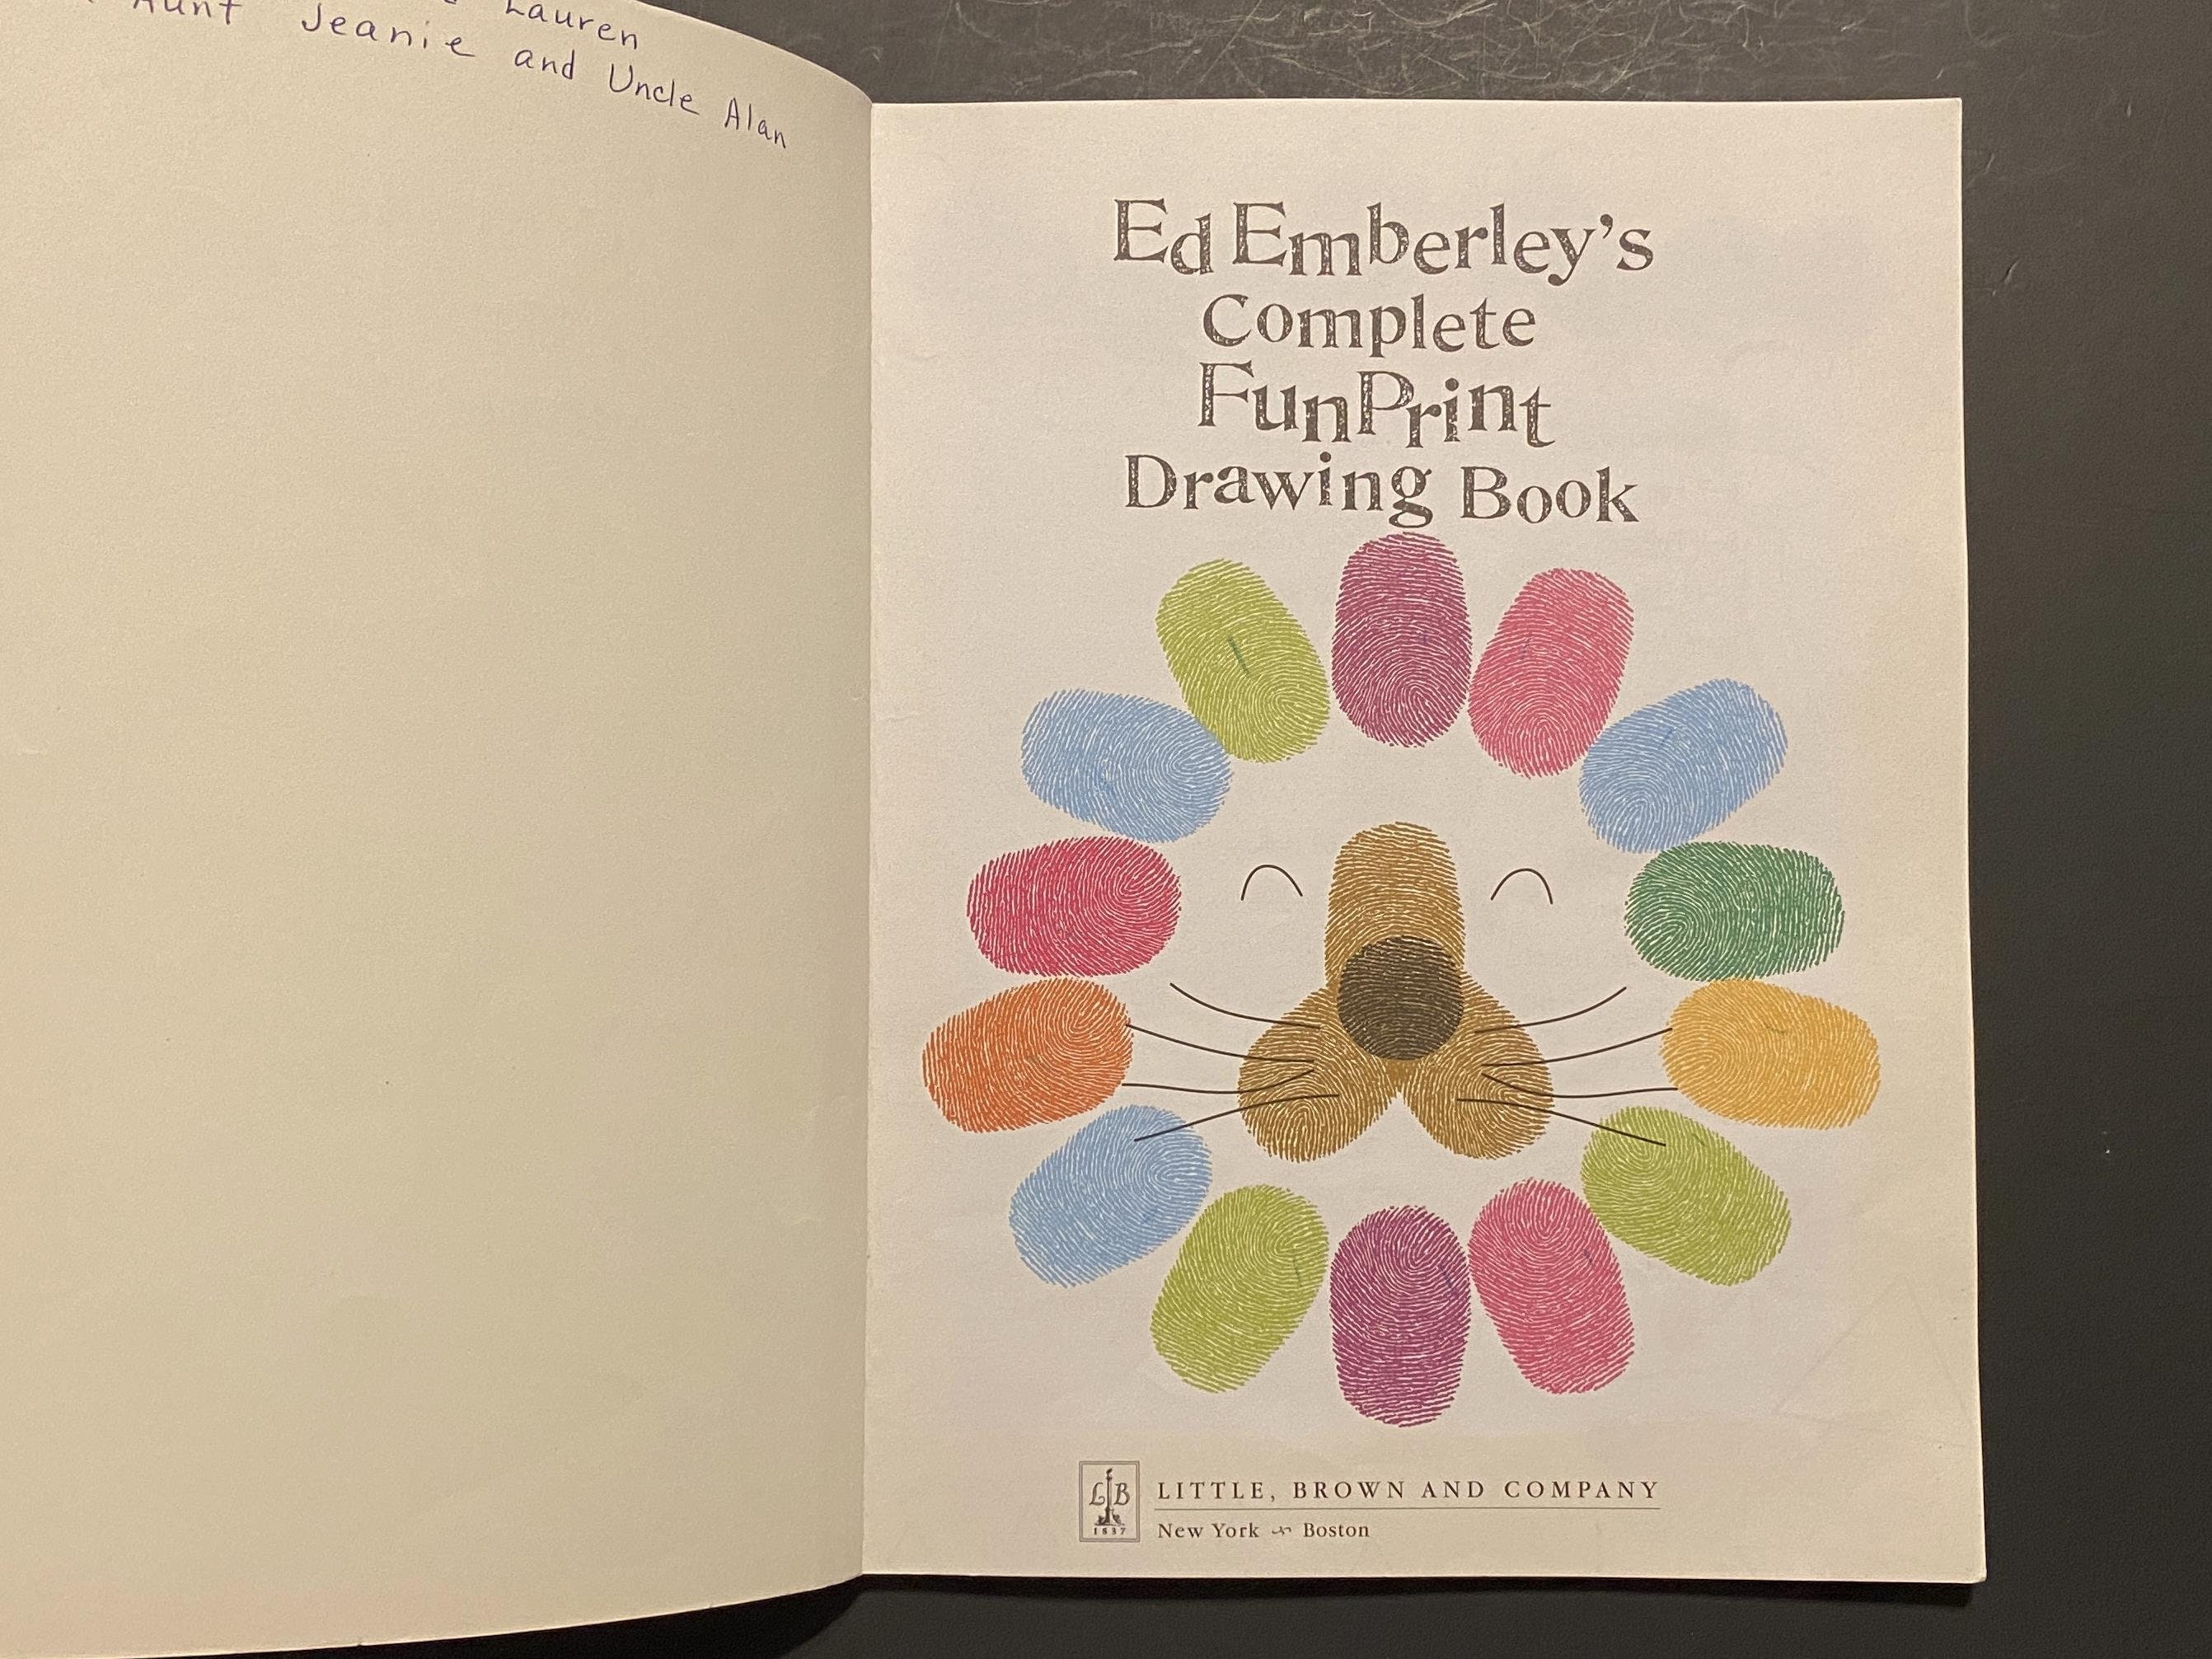 Ed Emberley's Complete Funprint Drawing Book – Cub Shrub